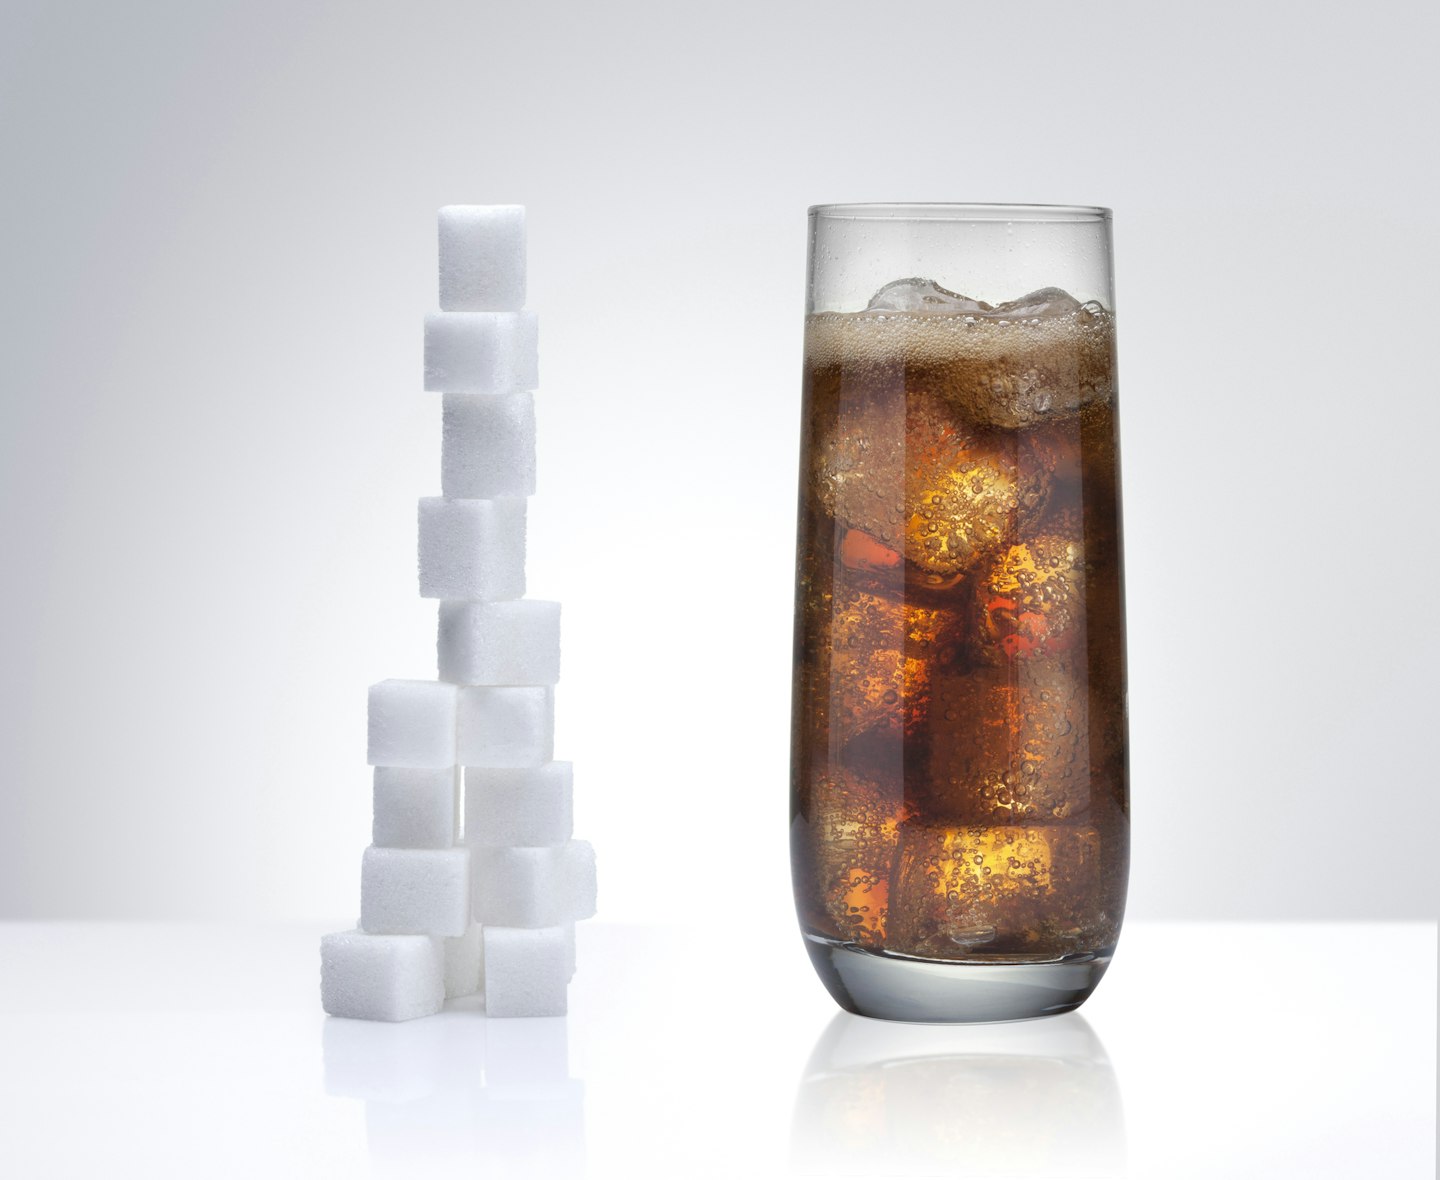 obesity sugary drinks sugar tax coca cola